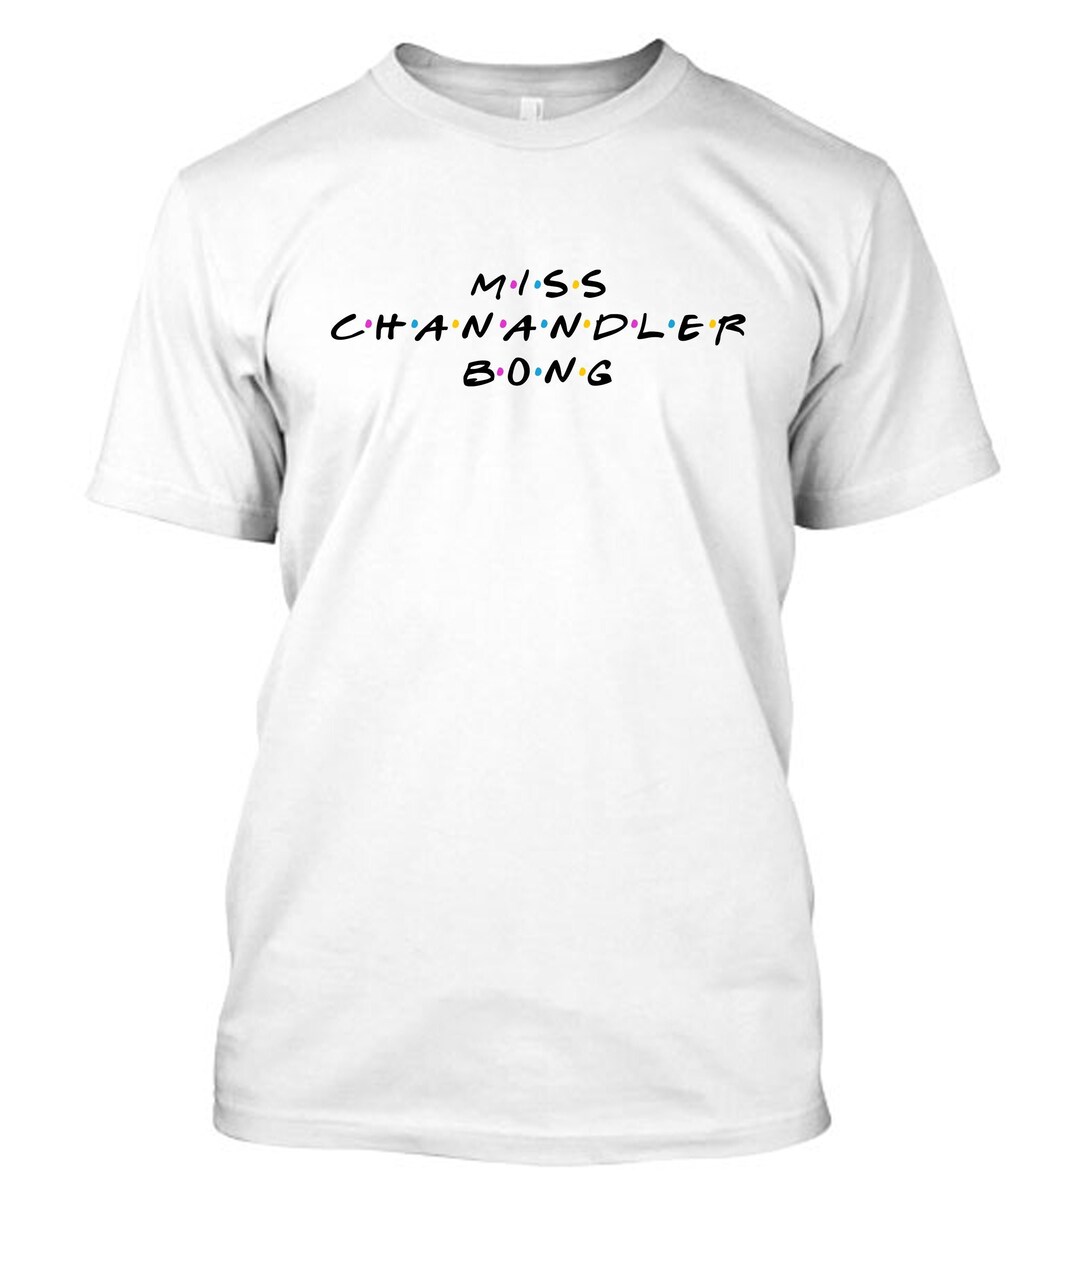 Friends TV Show Tshirt Tee T-shirt Miss Chanandler Bong - Etsy